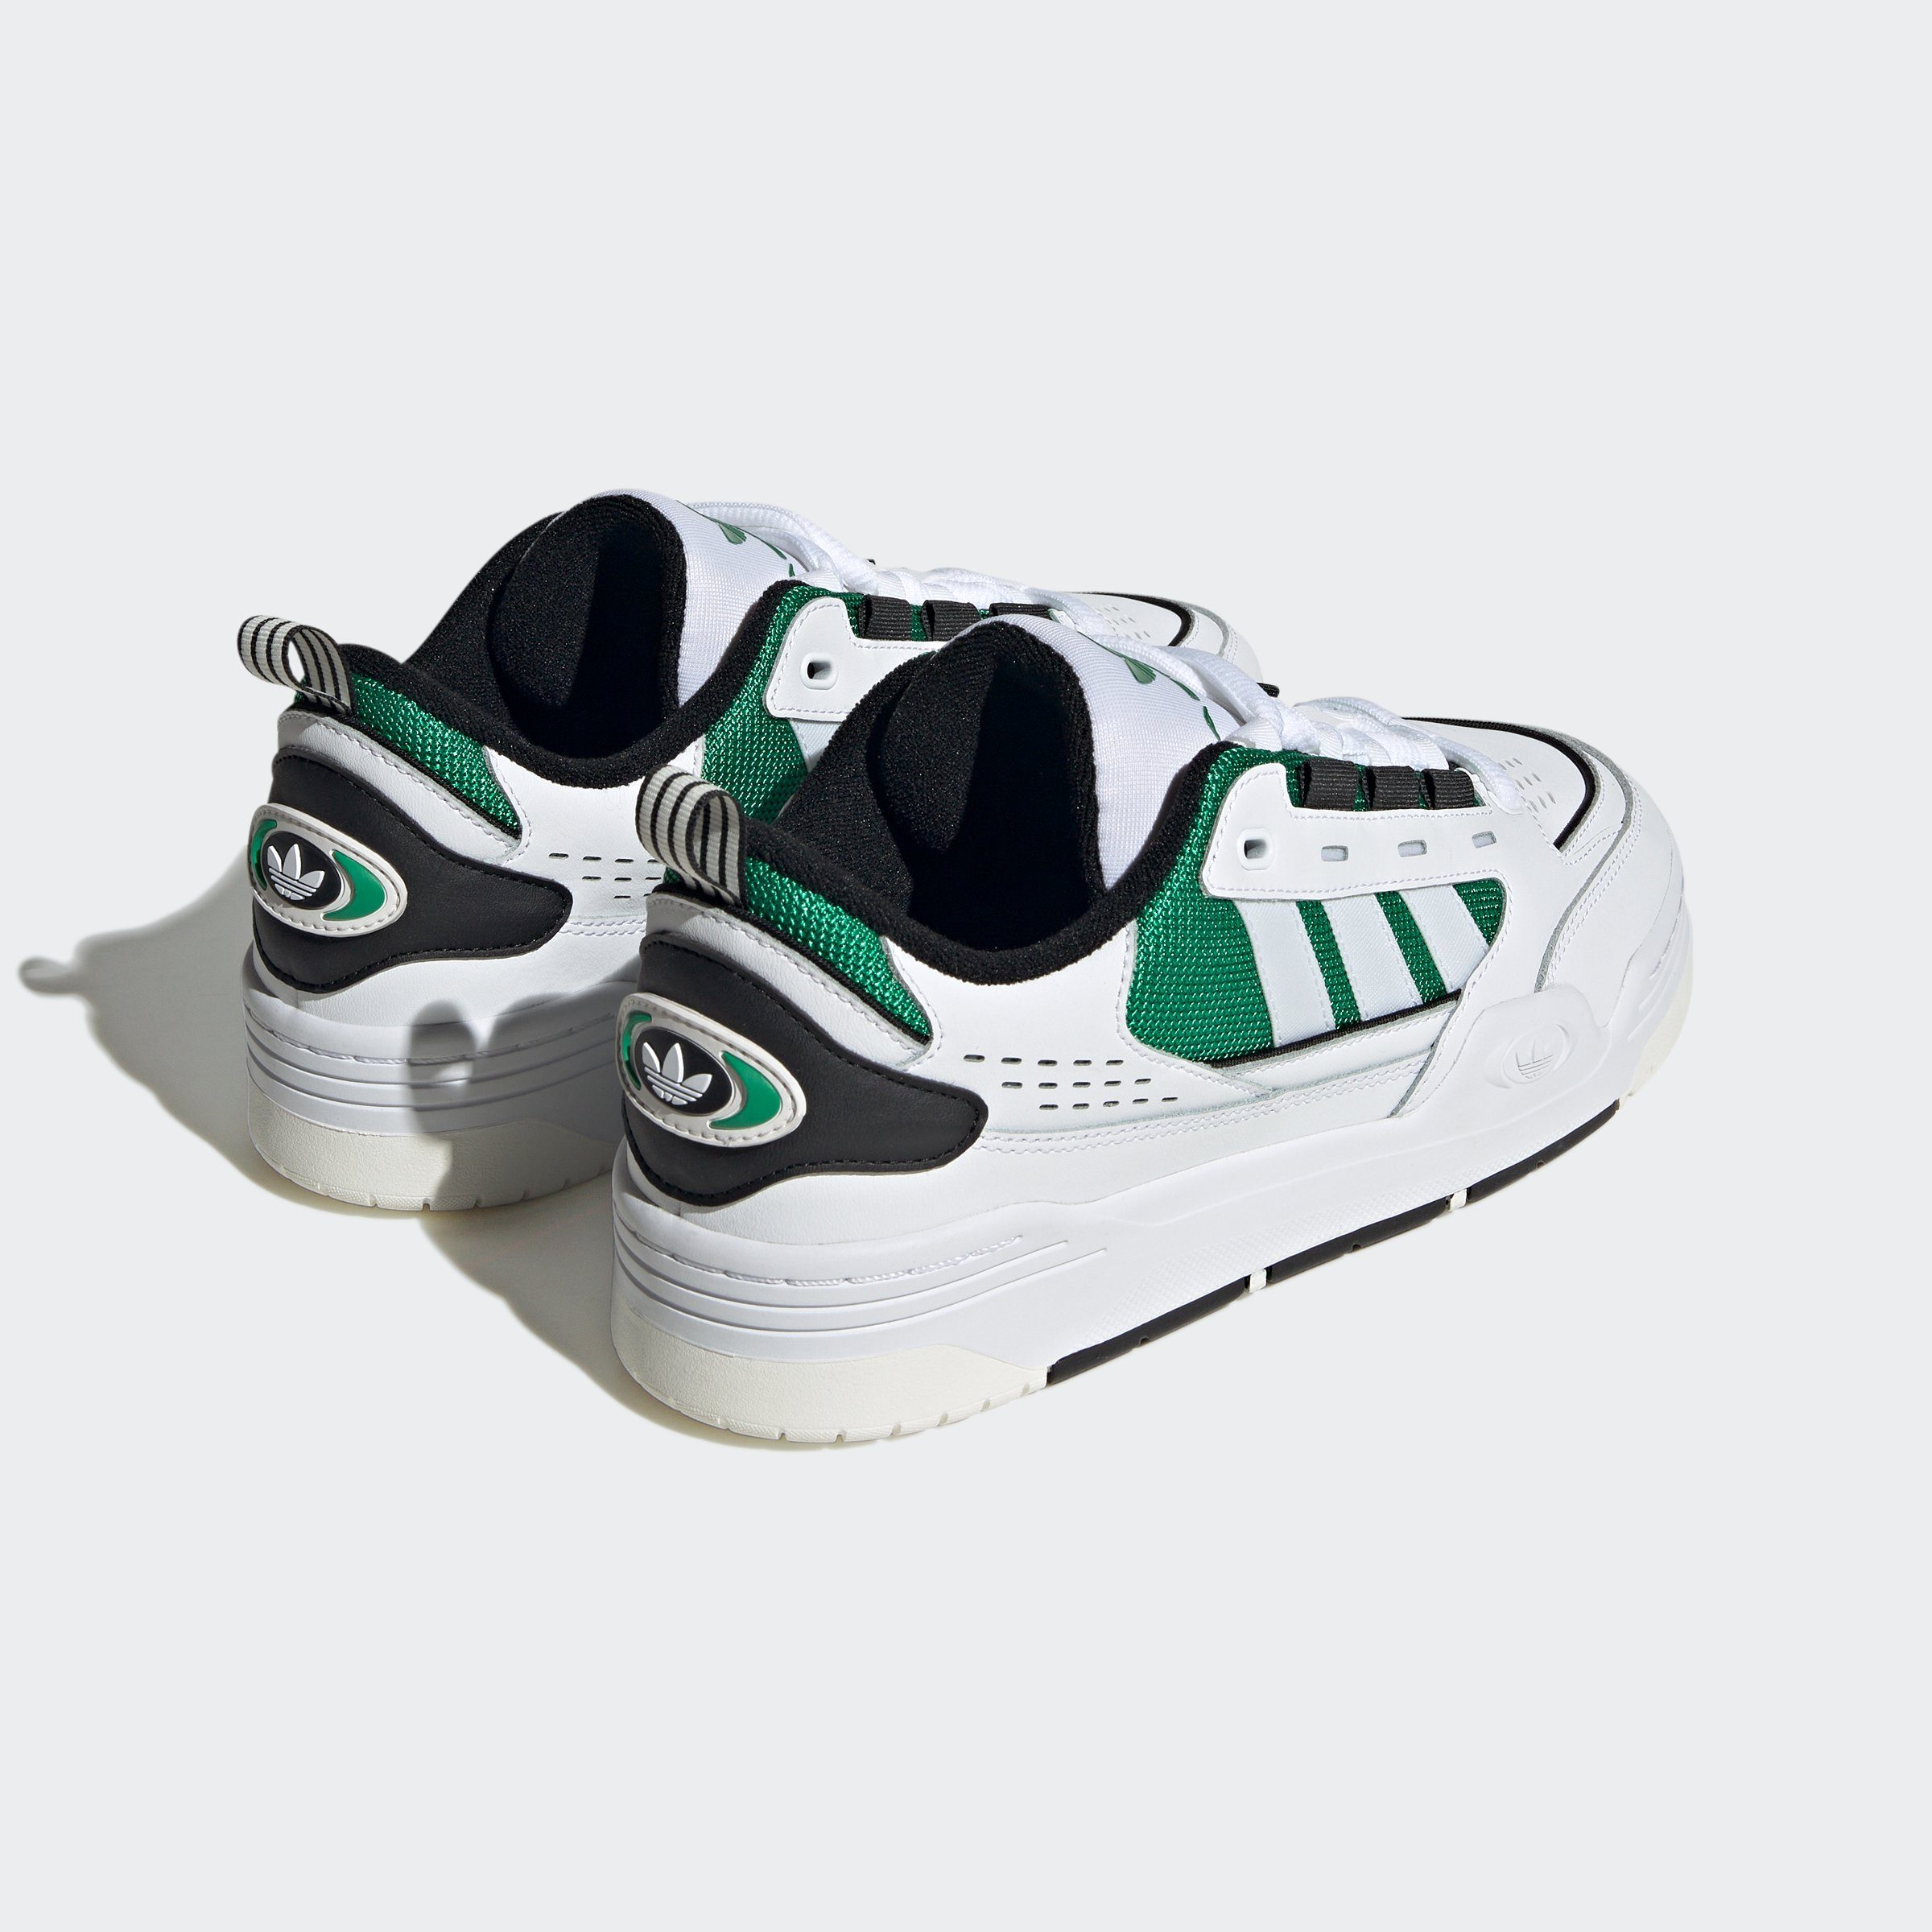 adidas / Originals Cloud White Cloud White Green ADI2000 / Sneaker